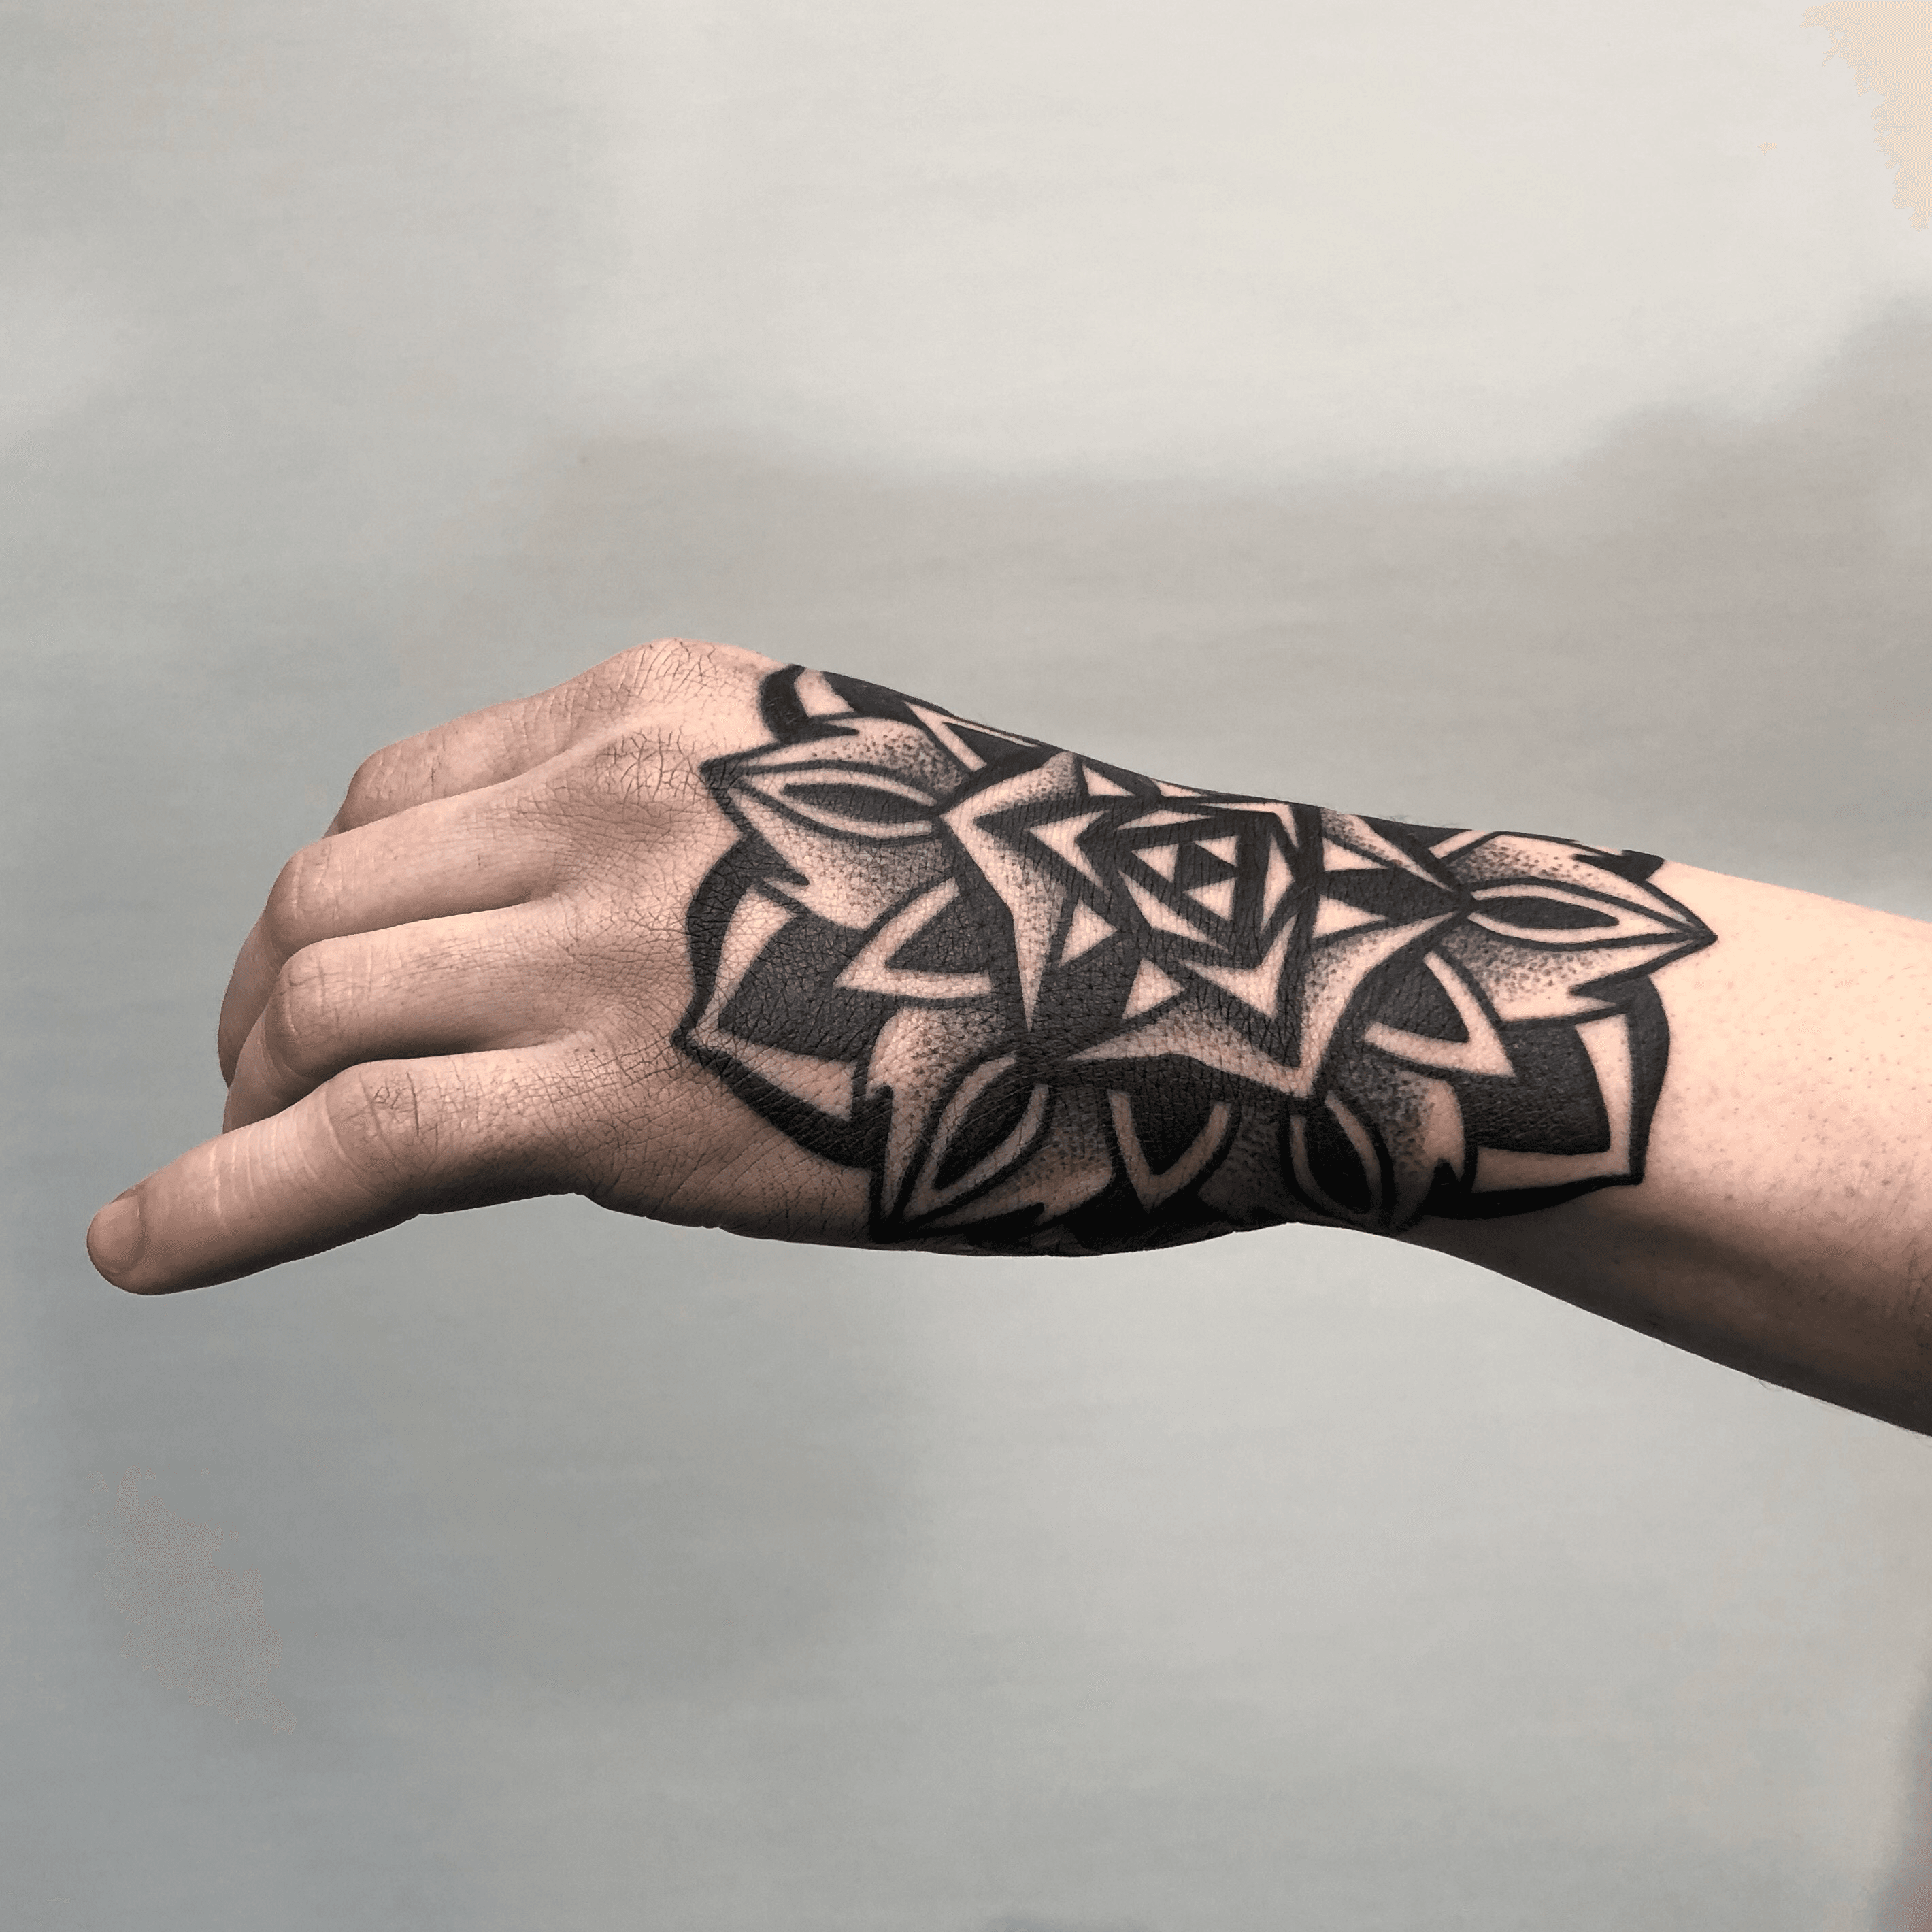 Top 63 Blackwork Tattoo Ideas 2021 Inspiration Guide